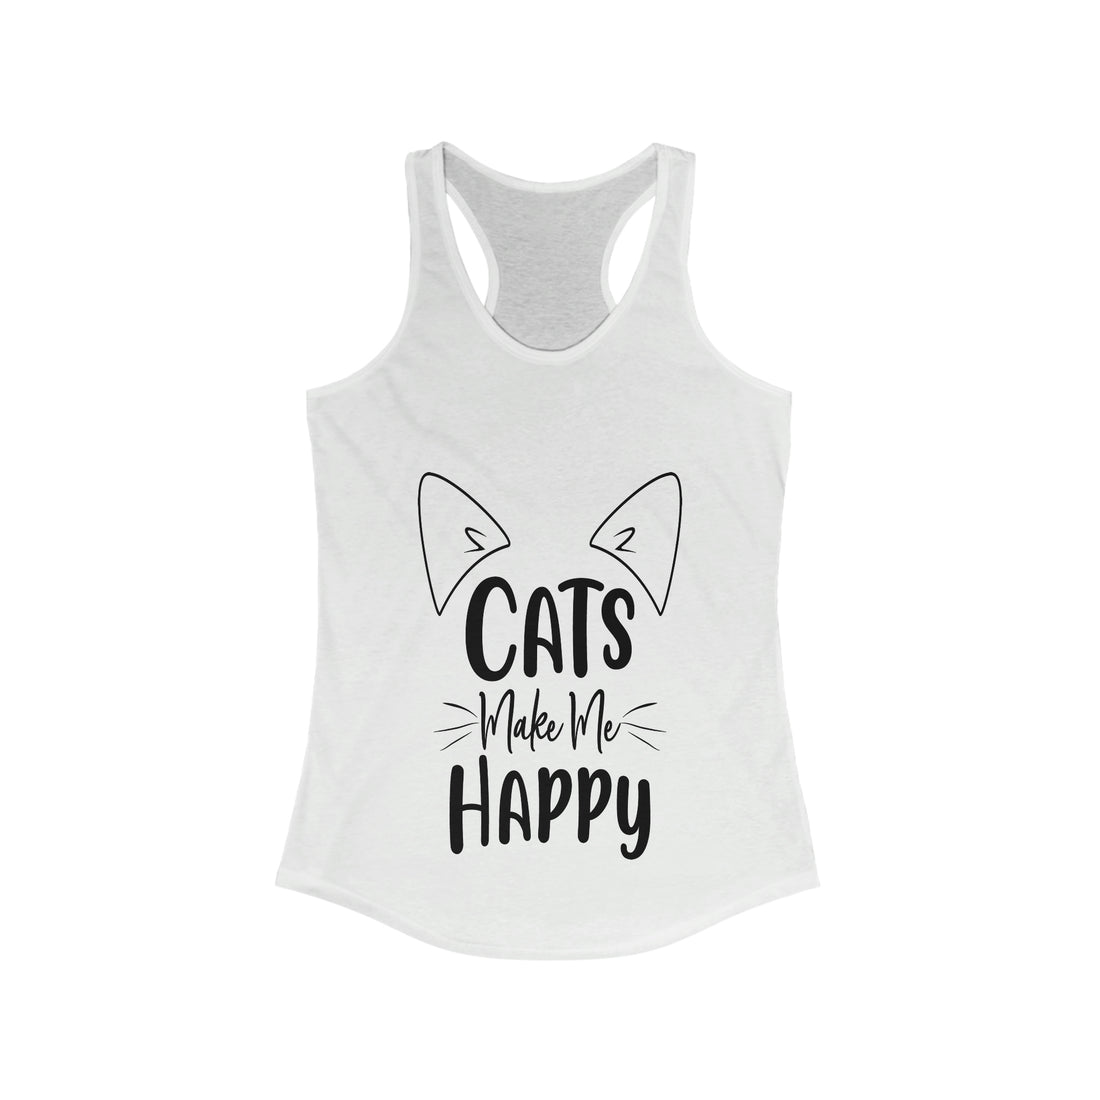 Cats Make Me Happy - Racerback Tank Top